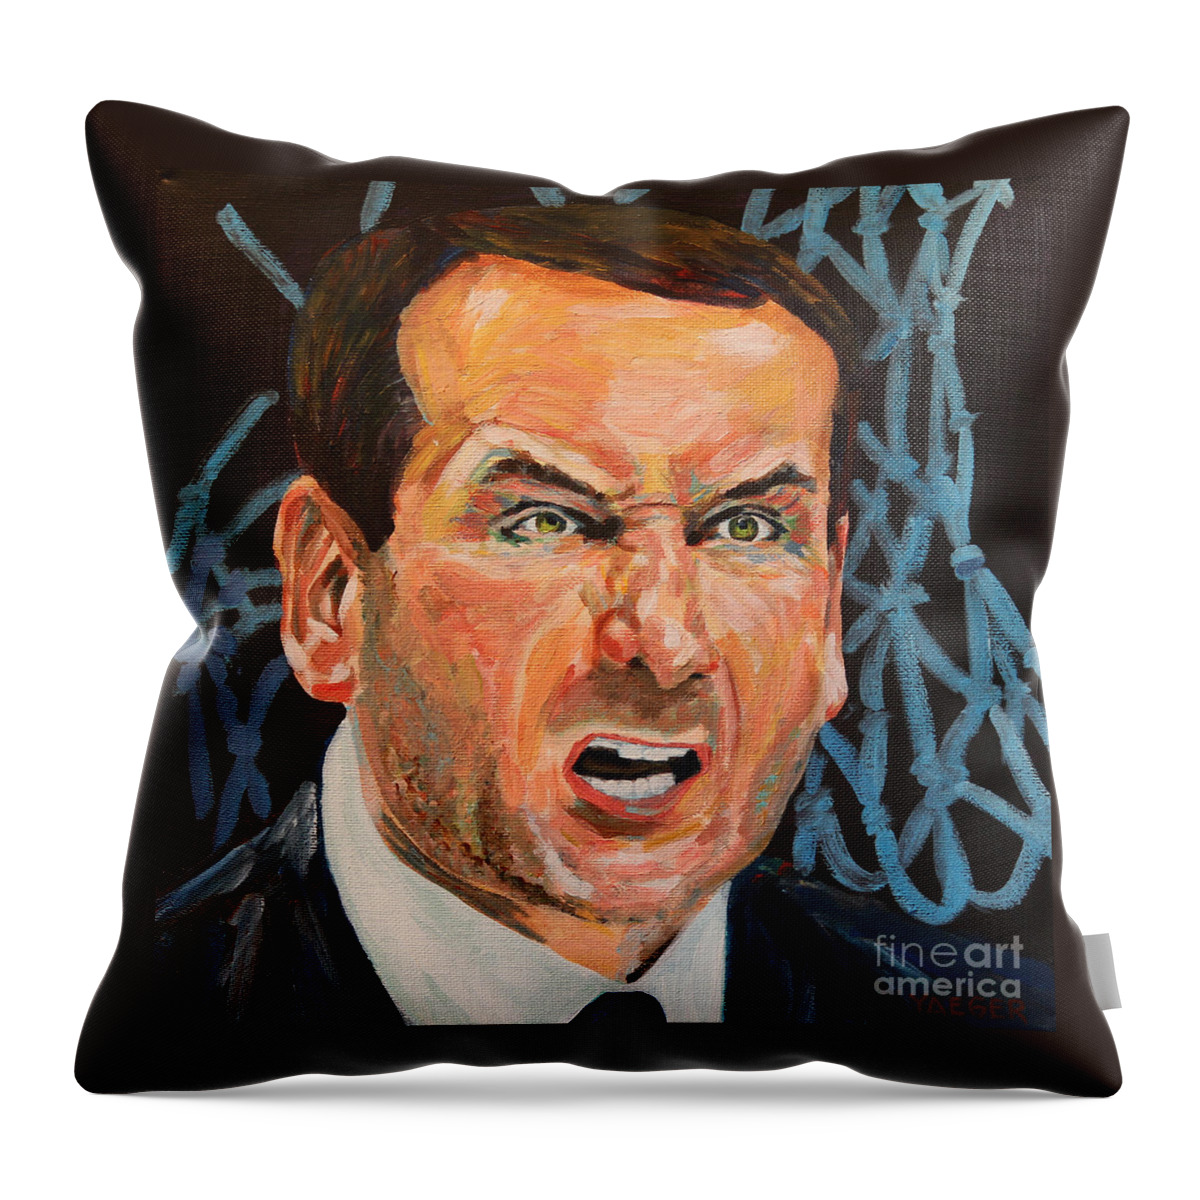 Coach K Throw Pillow featuring the painting Mike Krzyzewski aka Coach K Portrait by Robert Yaeger